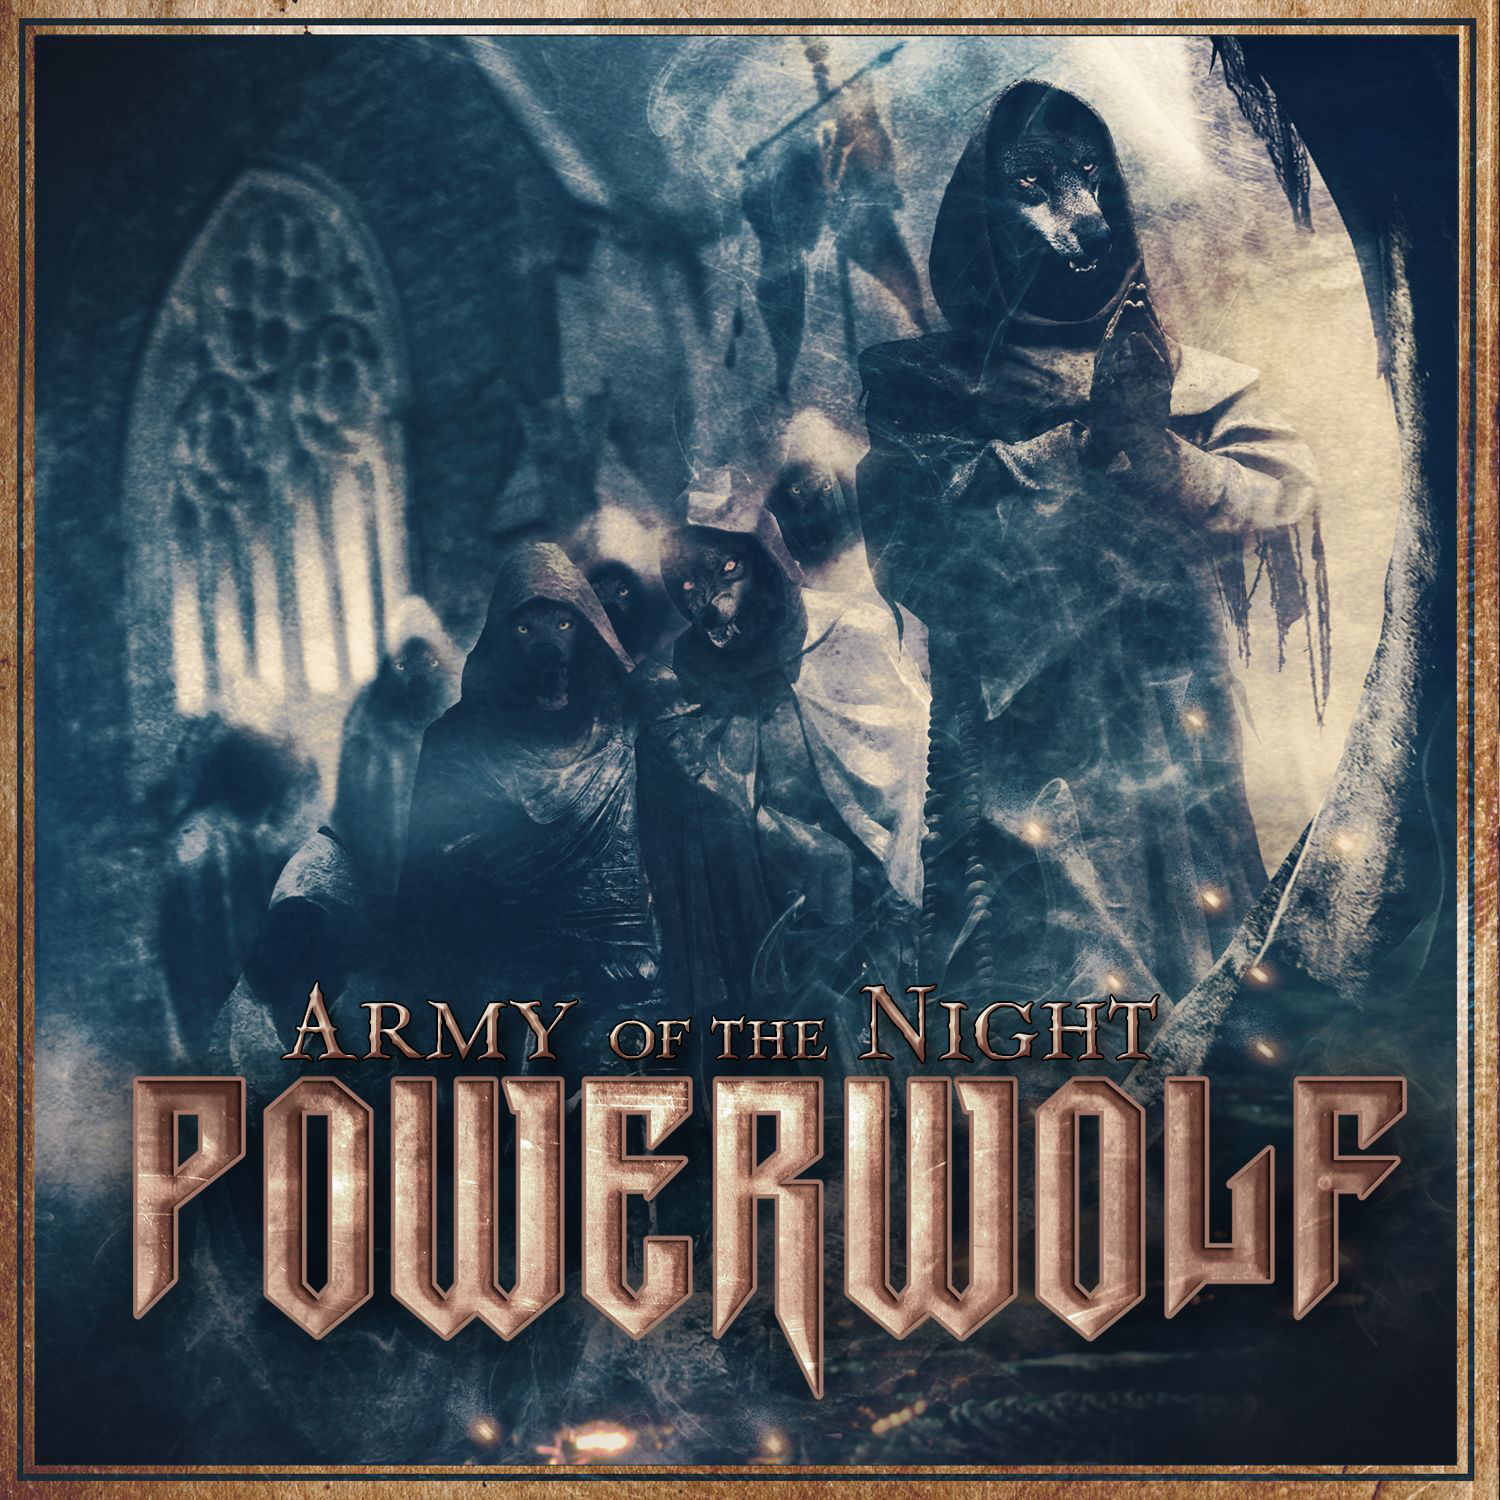 Army Of The Night  Powerwolf - LETRAS